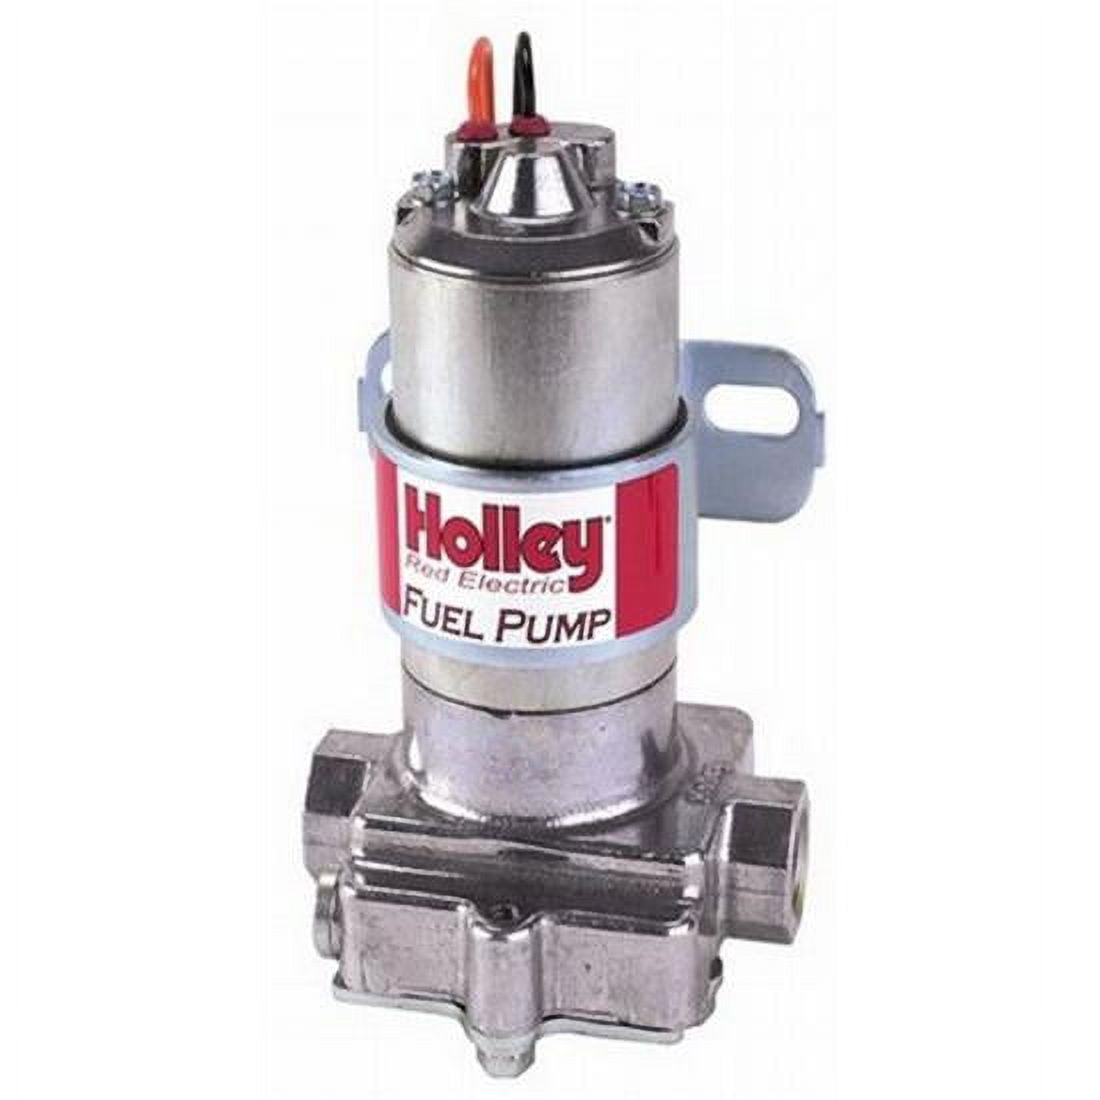 Holley 12-801-1 Red Electric Fuel Pump w/Fuel Press Gauge, 97 GPH